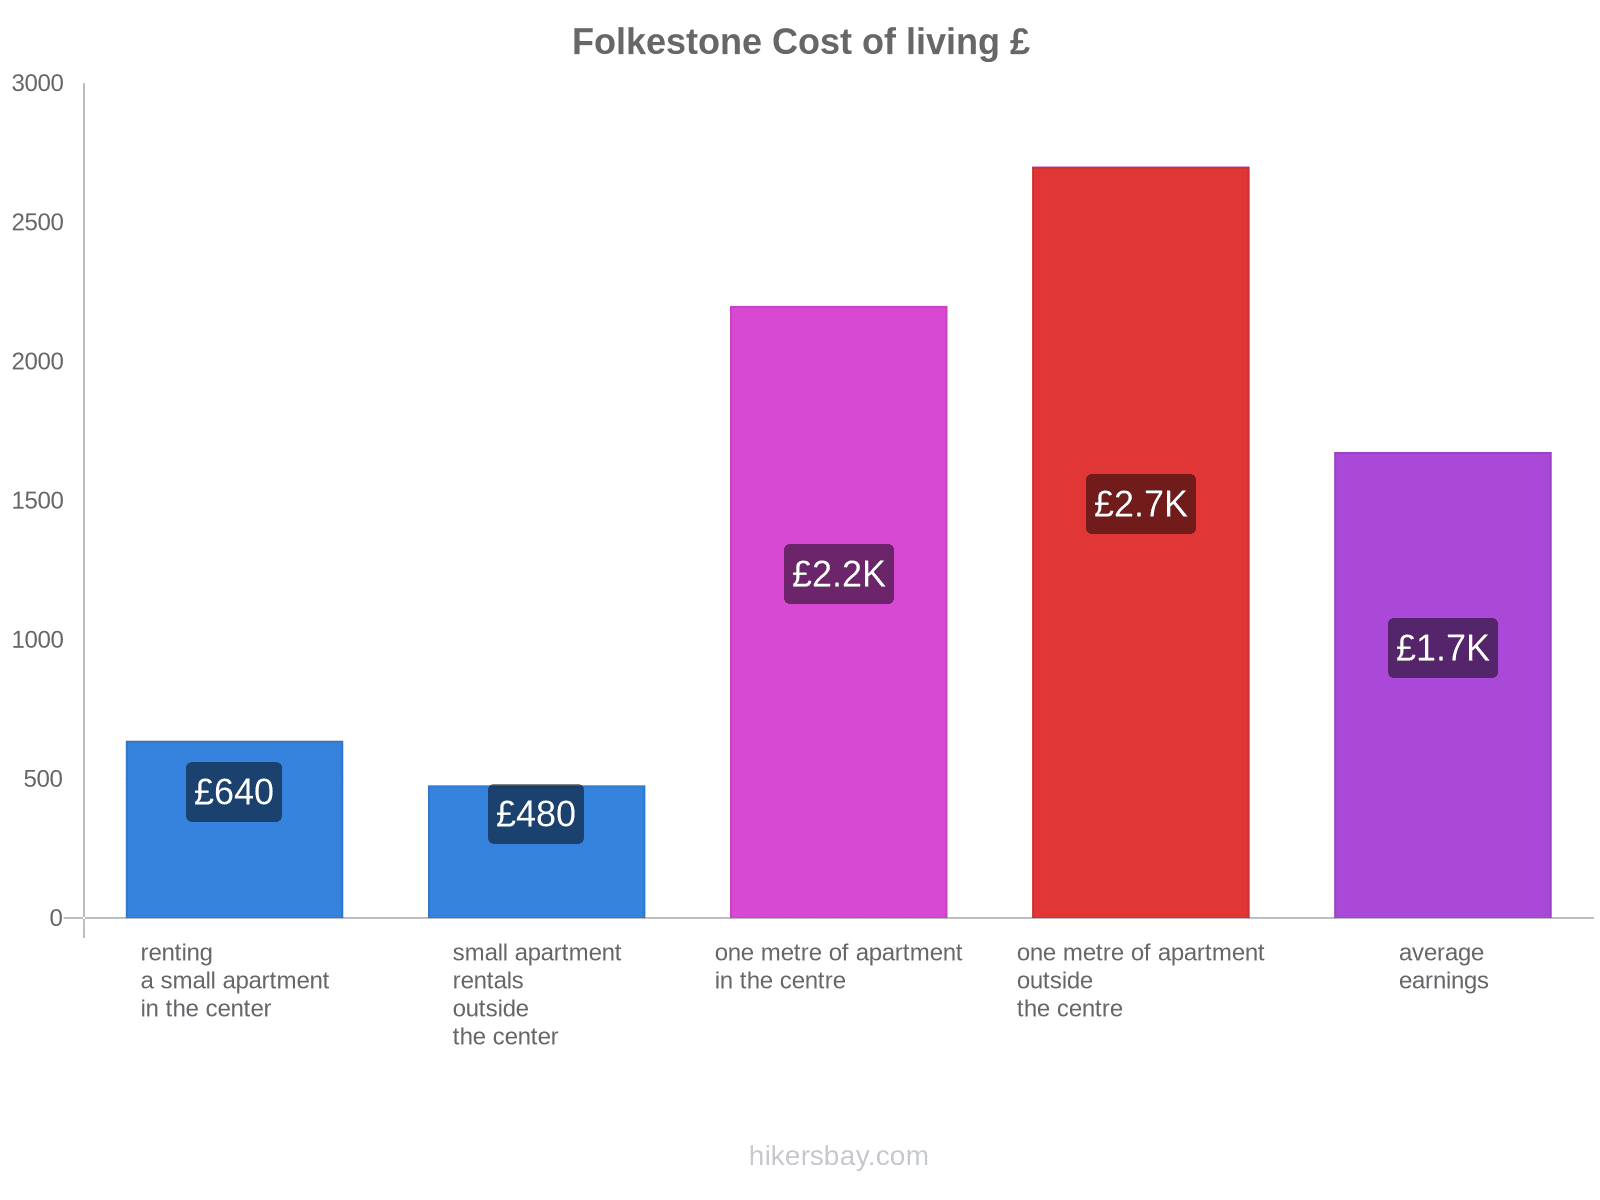 Folkestone cost of living hikersbay.com